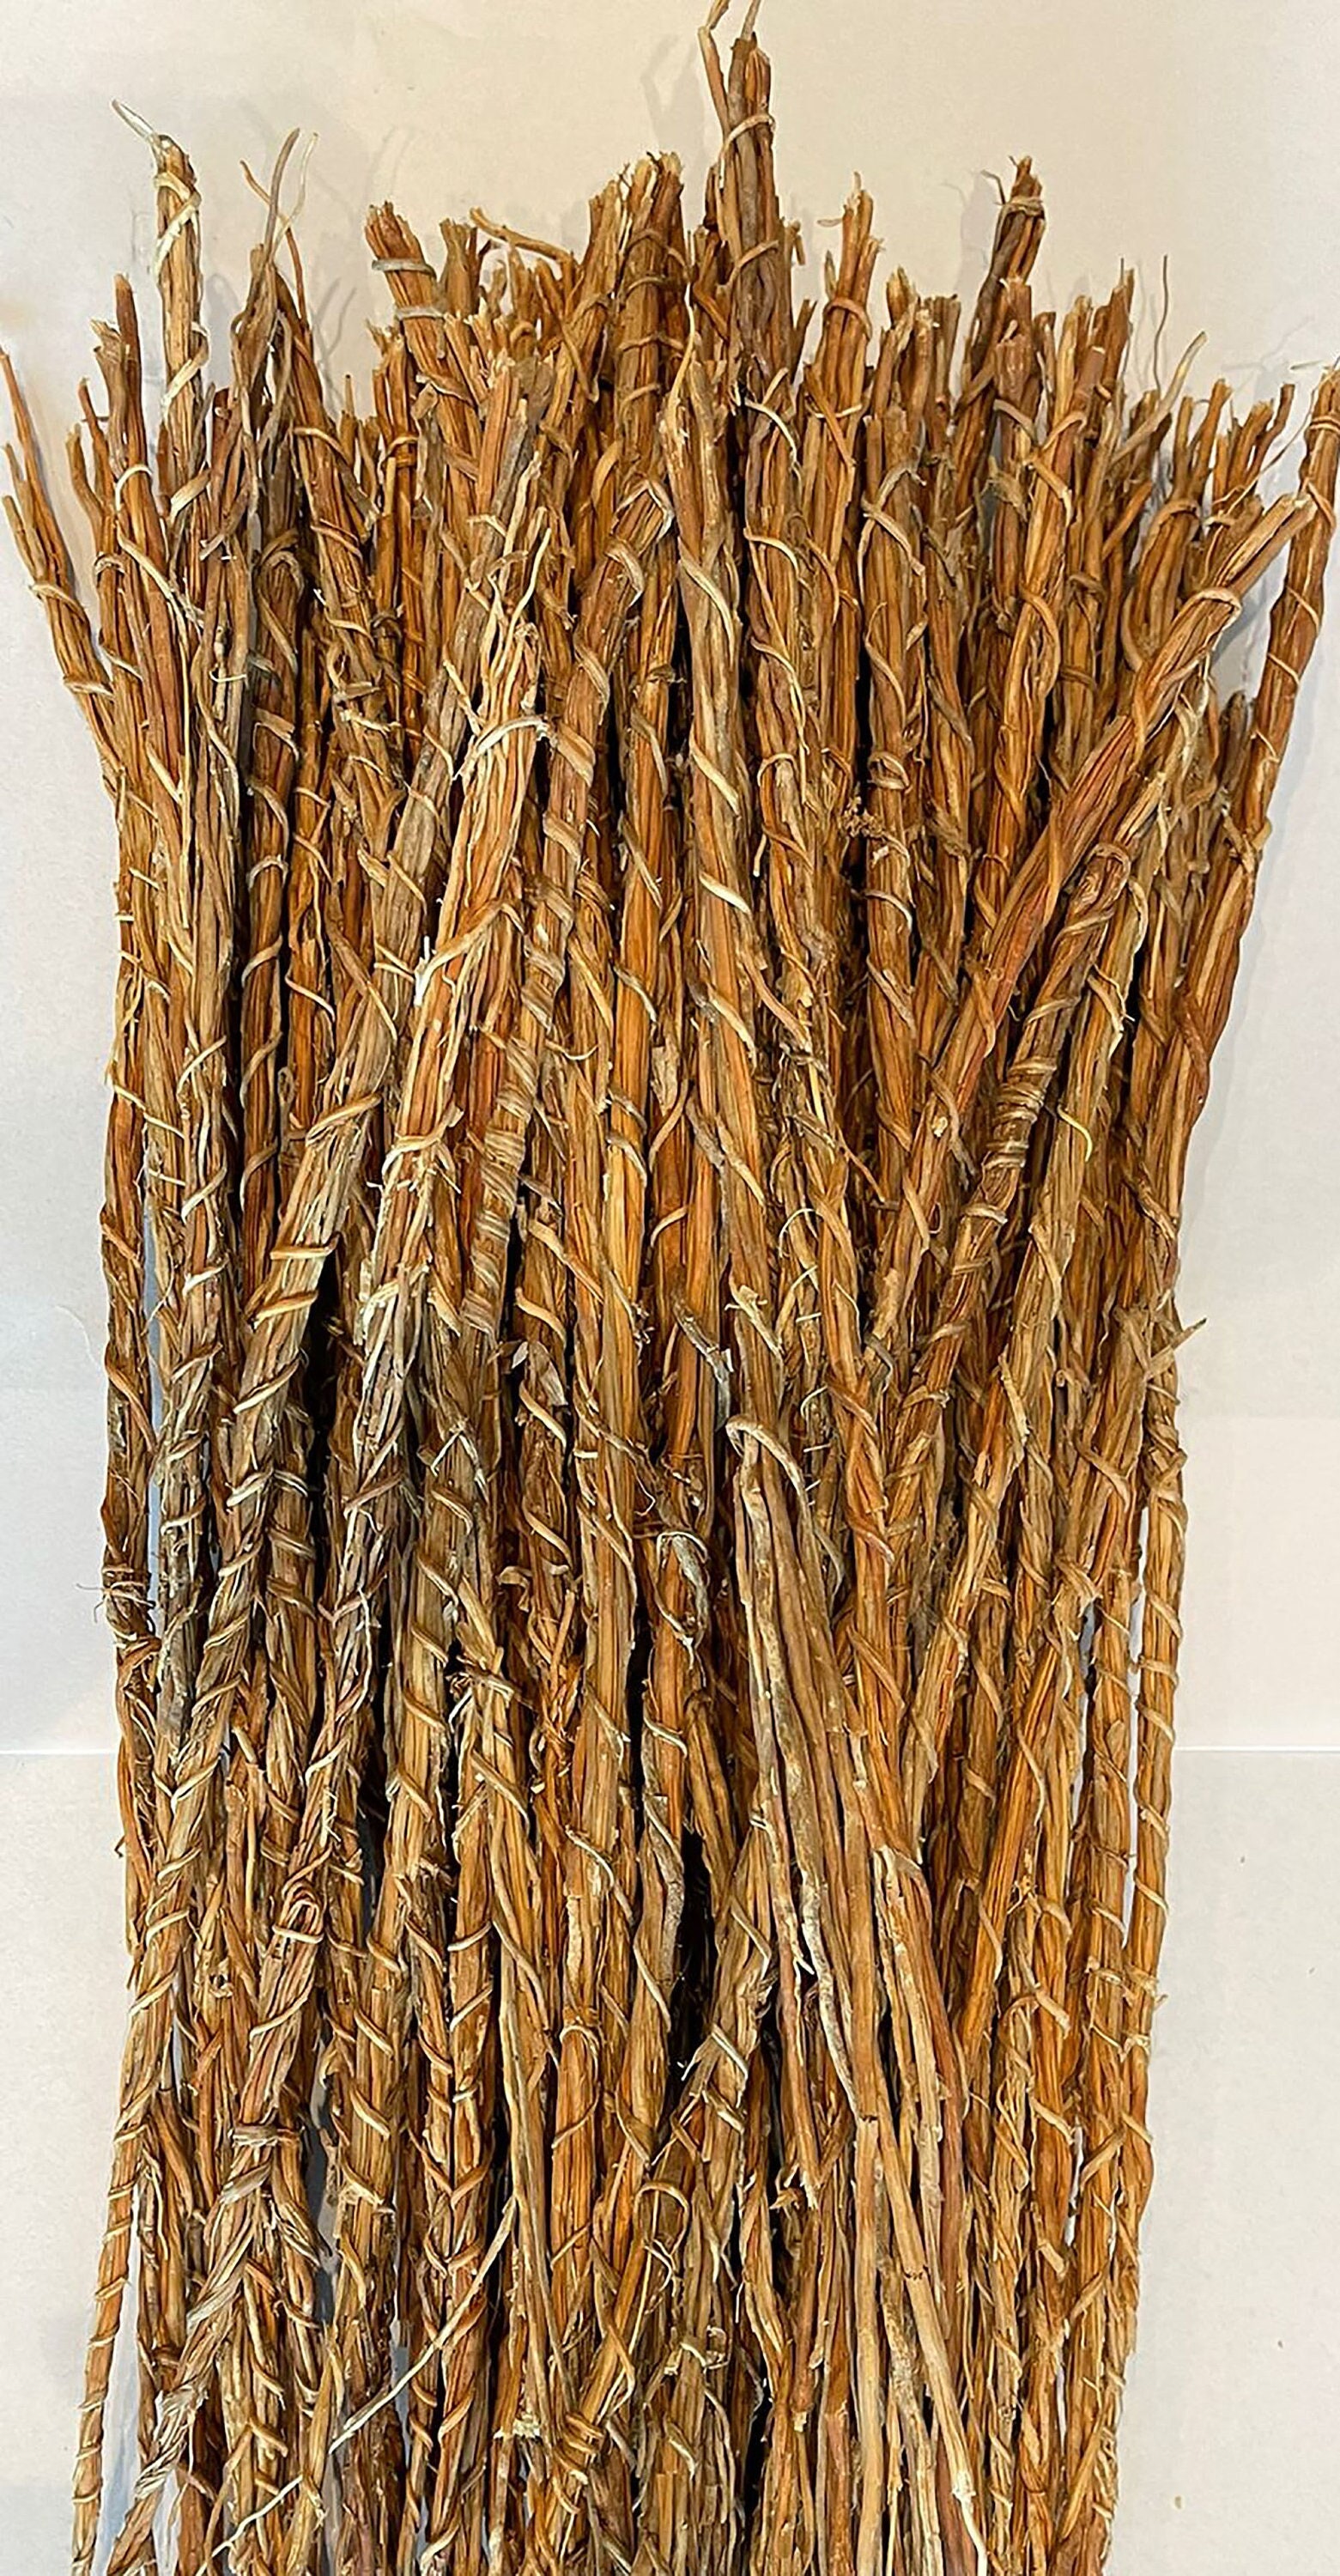 Gongolili - 20 Stems -Vetiver - Khamare - Rene - Sepa Root Organic from  West Africa - Stems 20 gongolili sticks